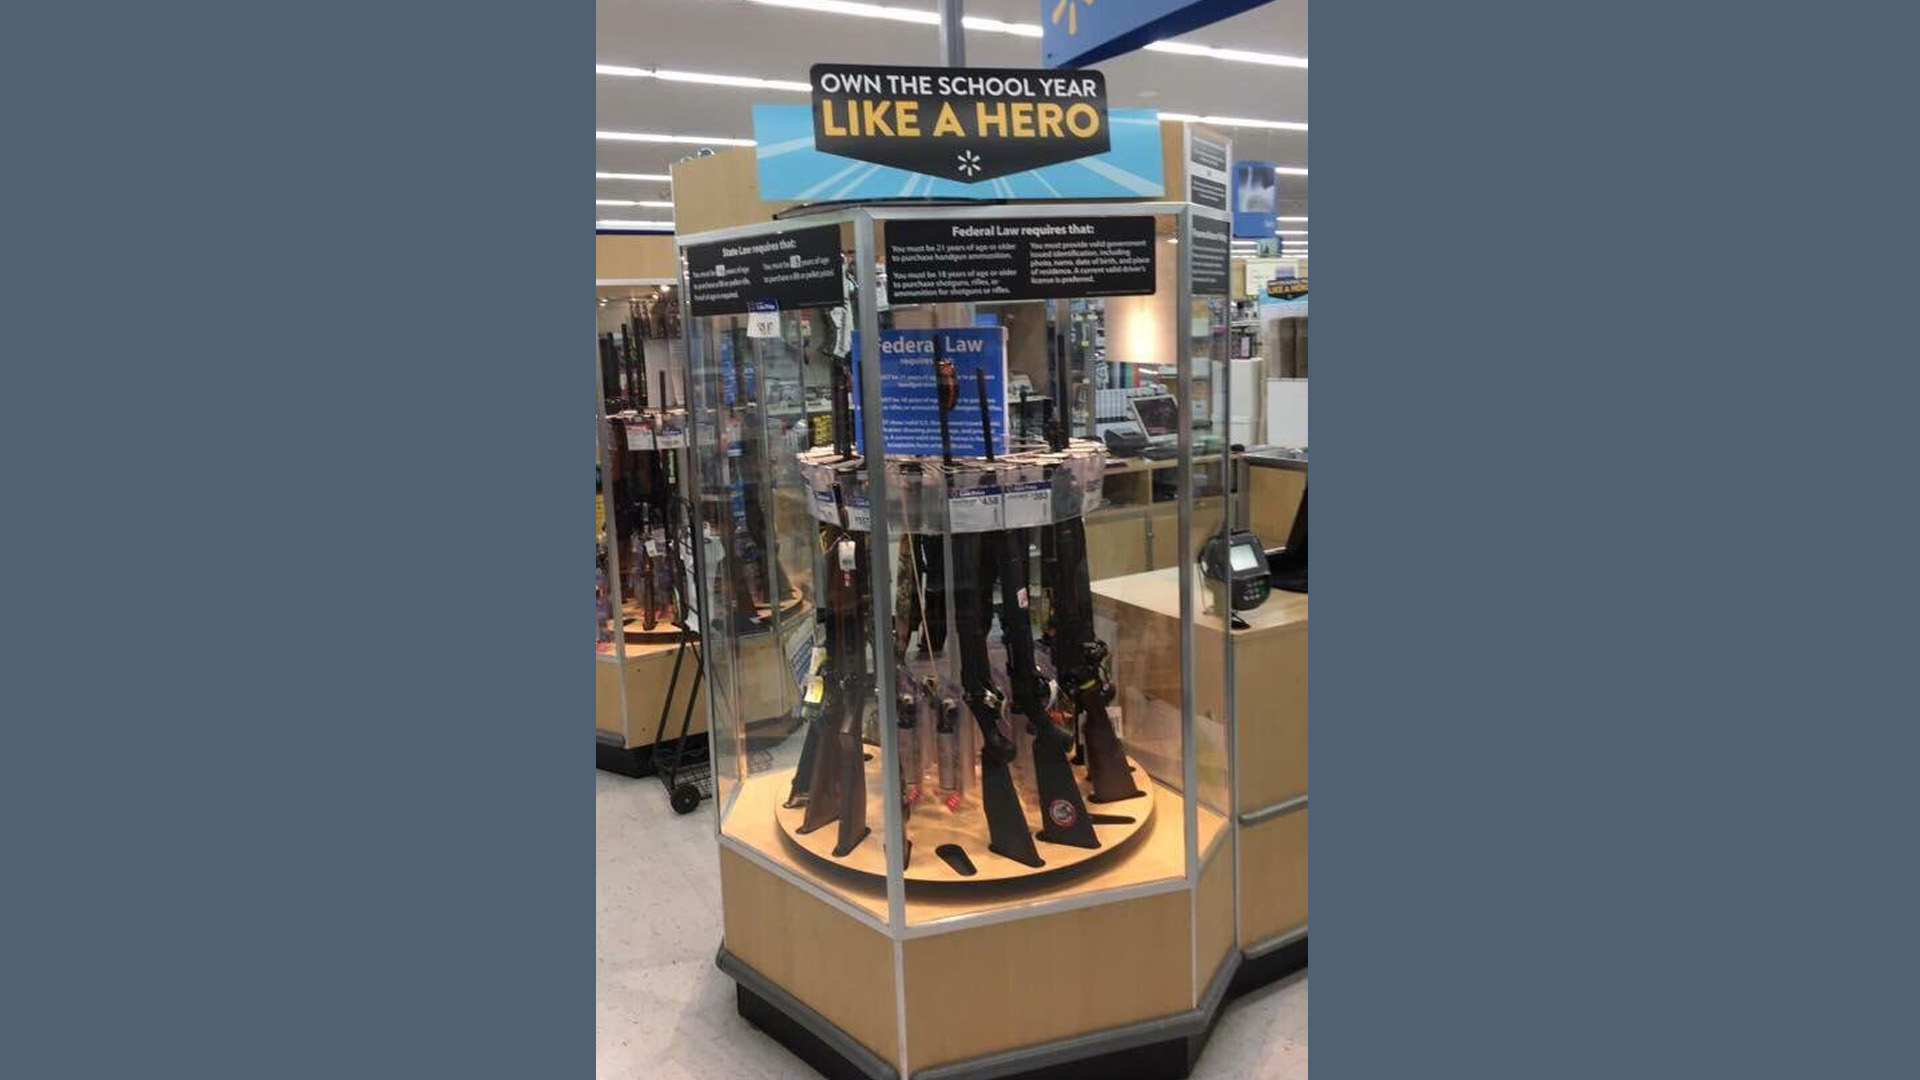 Walmart responds to photo of back-to-school gun display